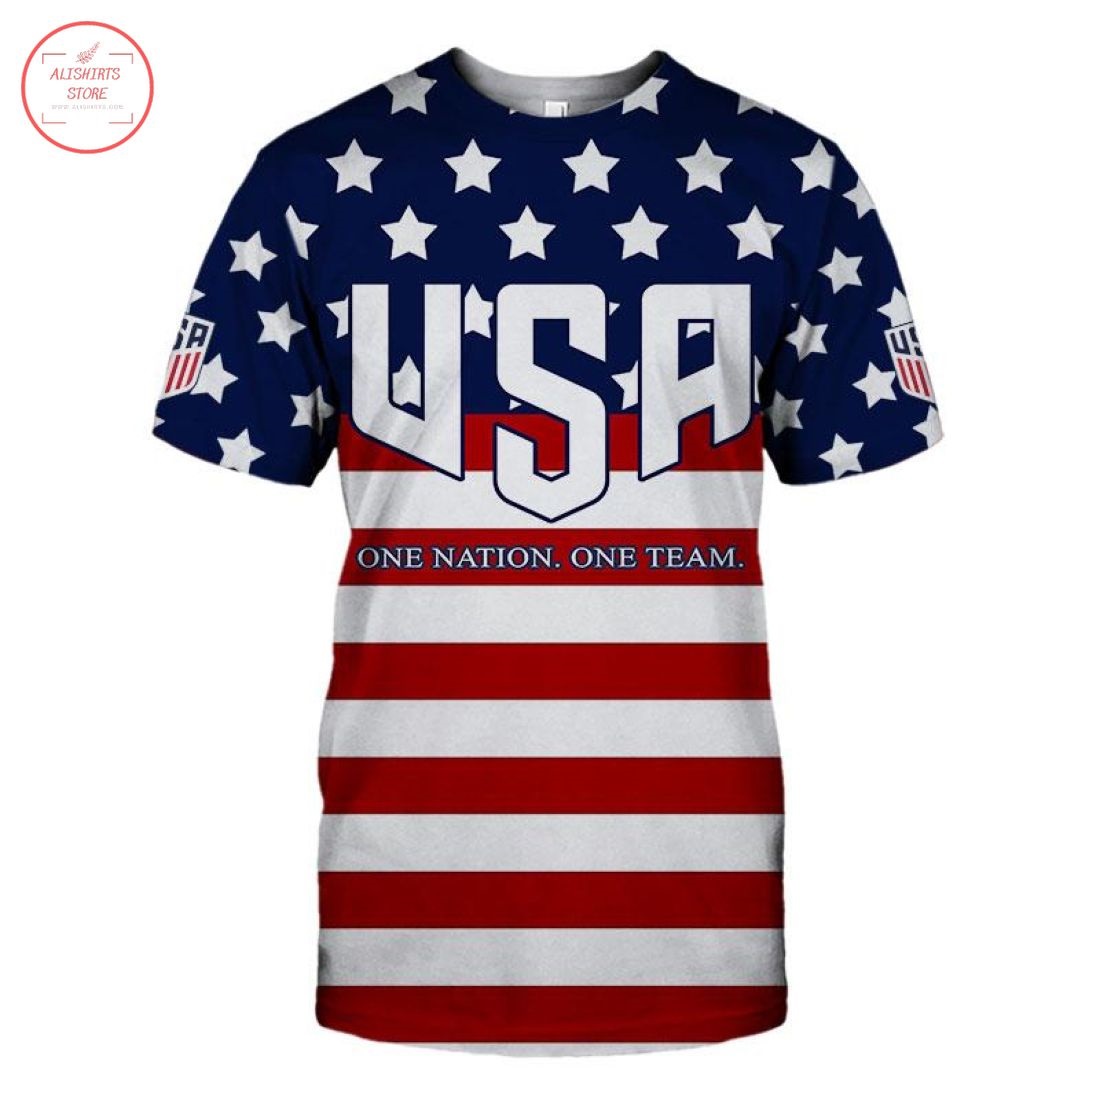 USA One Nation One Team Shirt